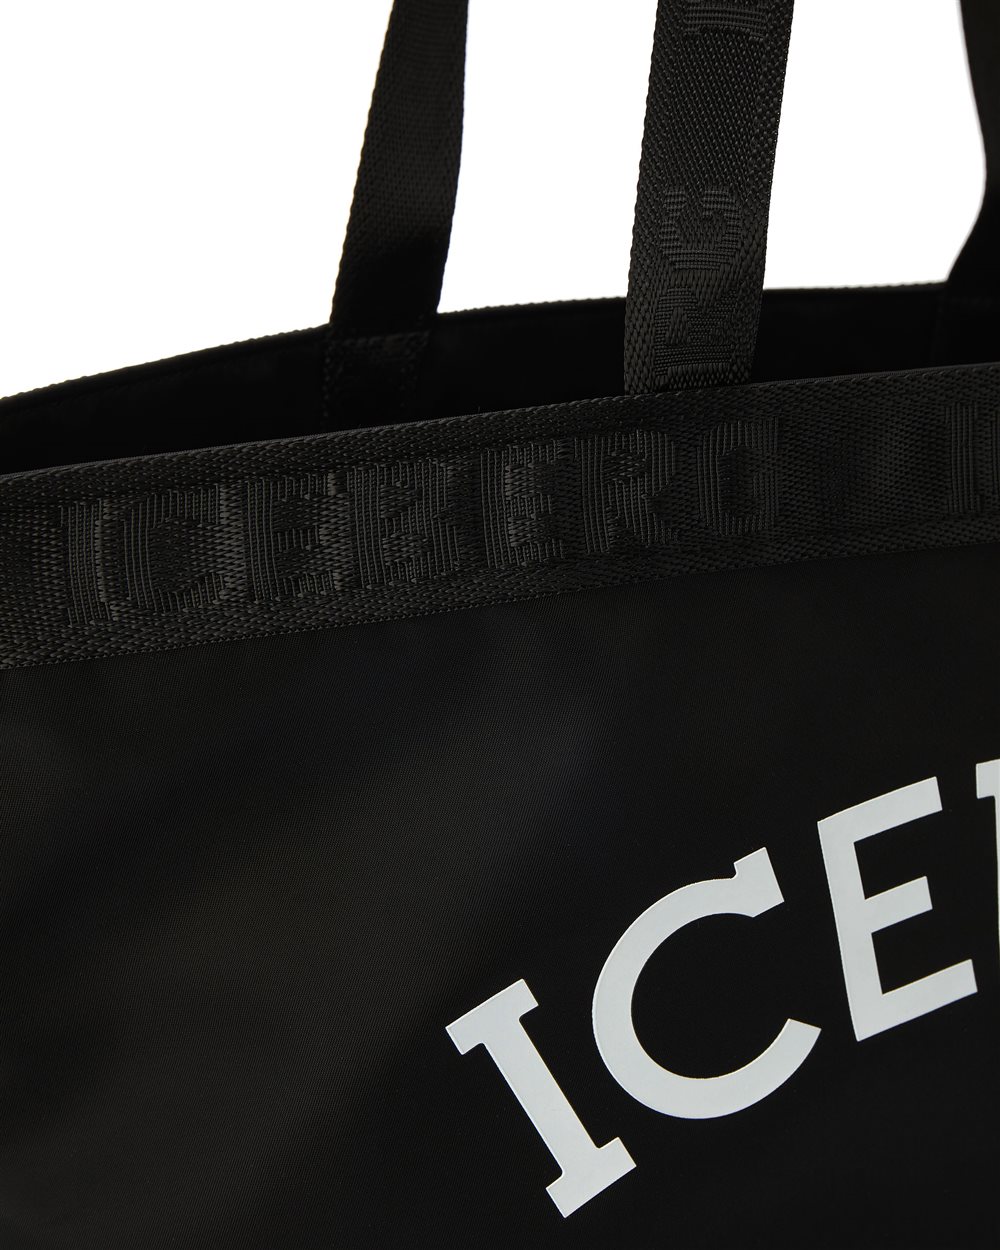 Shopper con logo istituzionale - Iceberg - Official Website